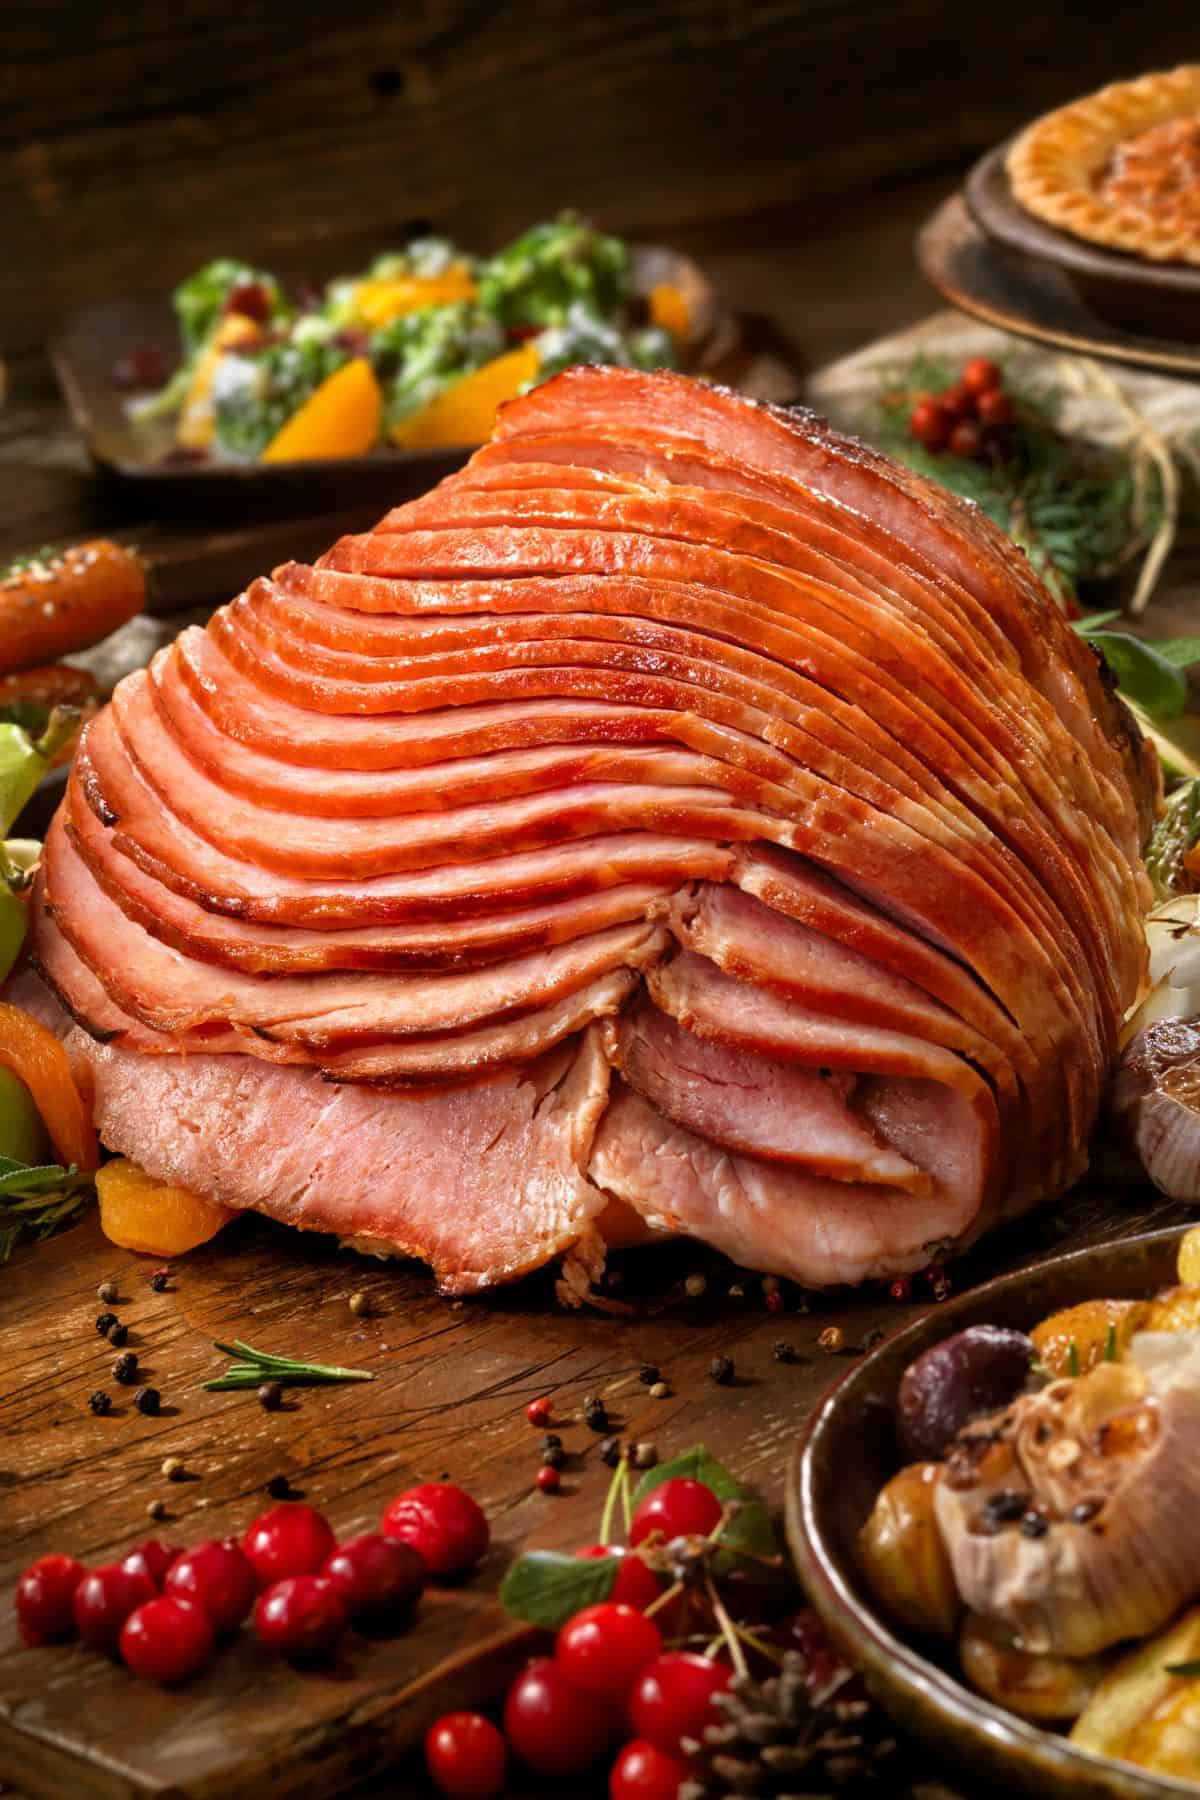 Crockpot honey glazed ham on a cutting board with garnishes around it.